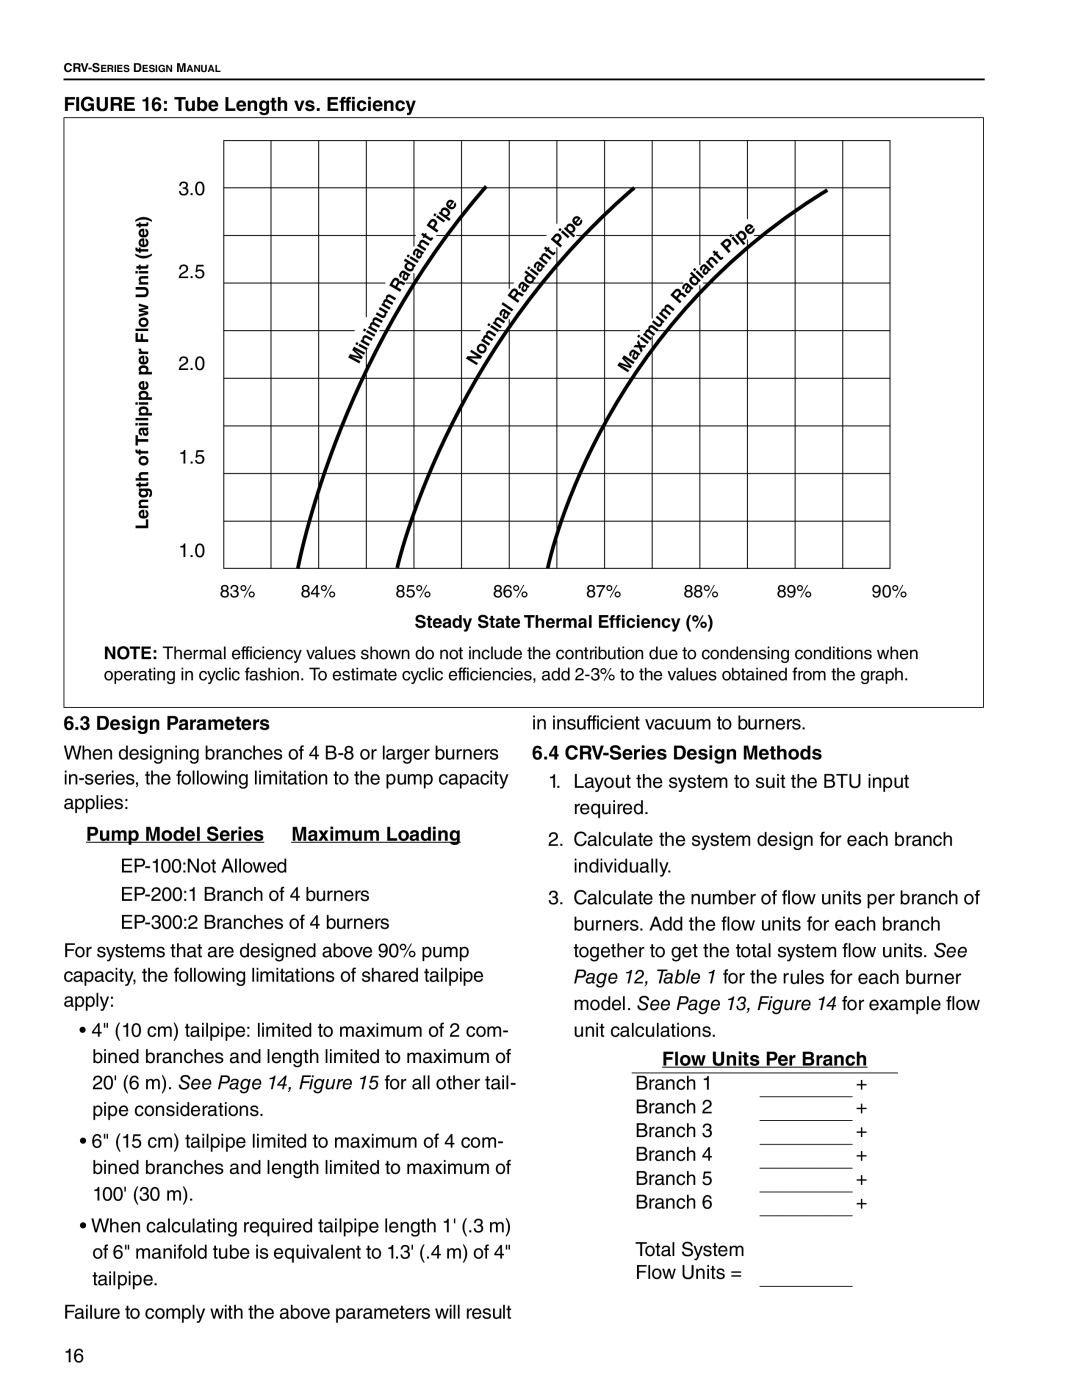 Roberts Gorden CRV-B-9 service manual Tube Length vs. Efficiency, Design Parameters, Pump Model Series Maximum Loading 